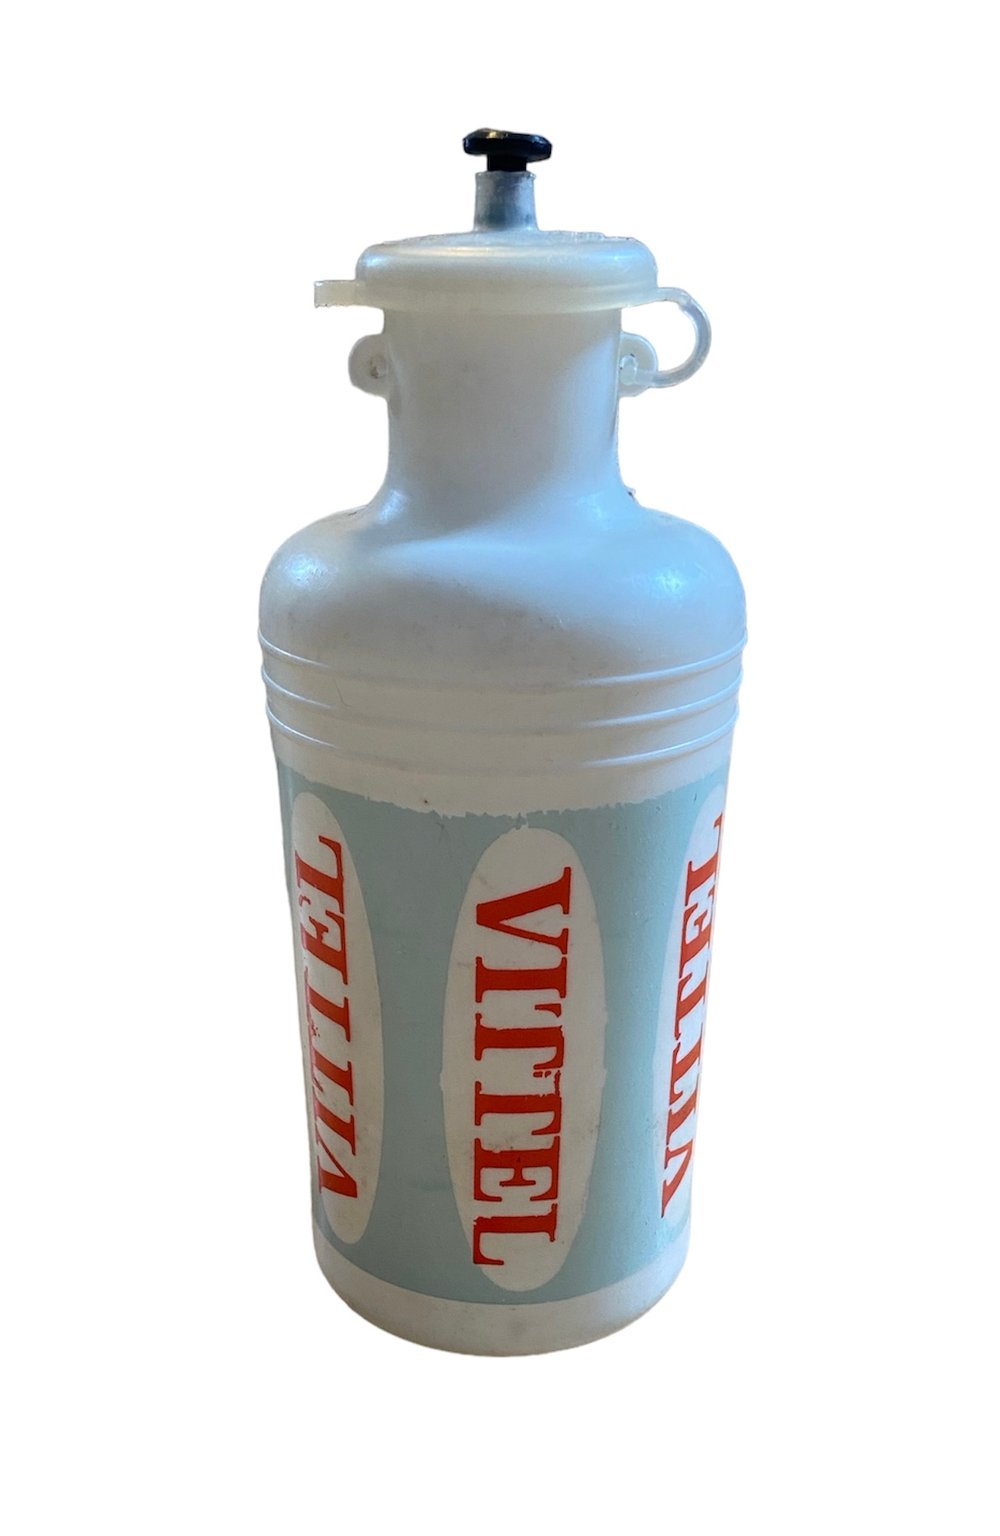 1971 - Tour de France - Vittel water bottle